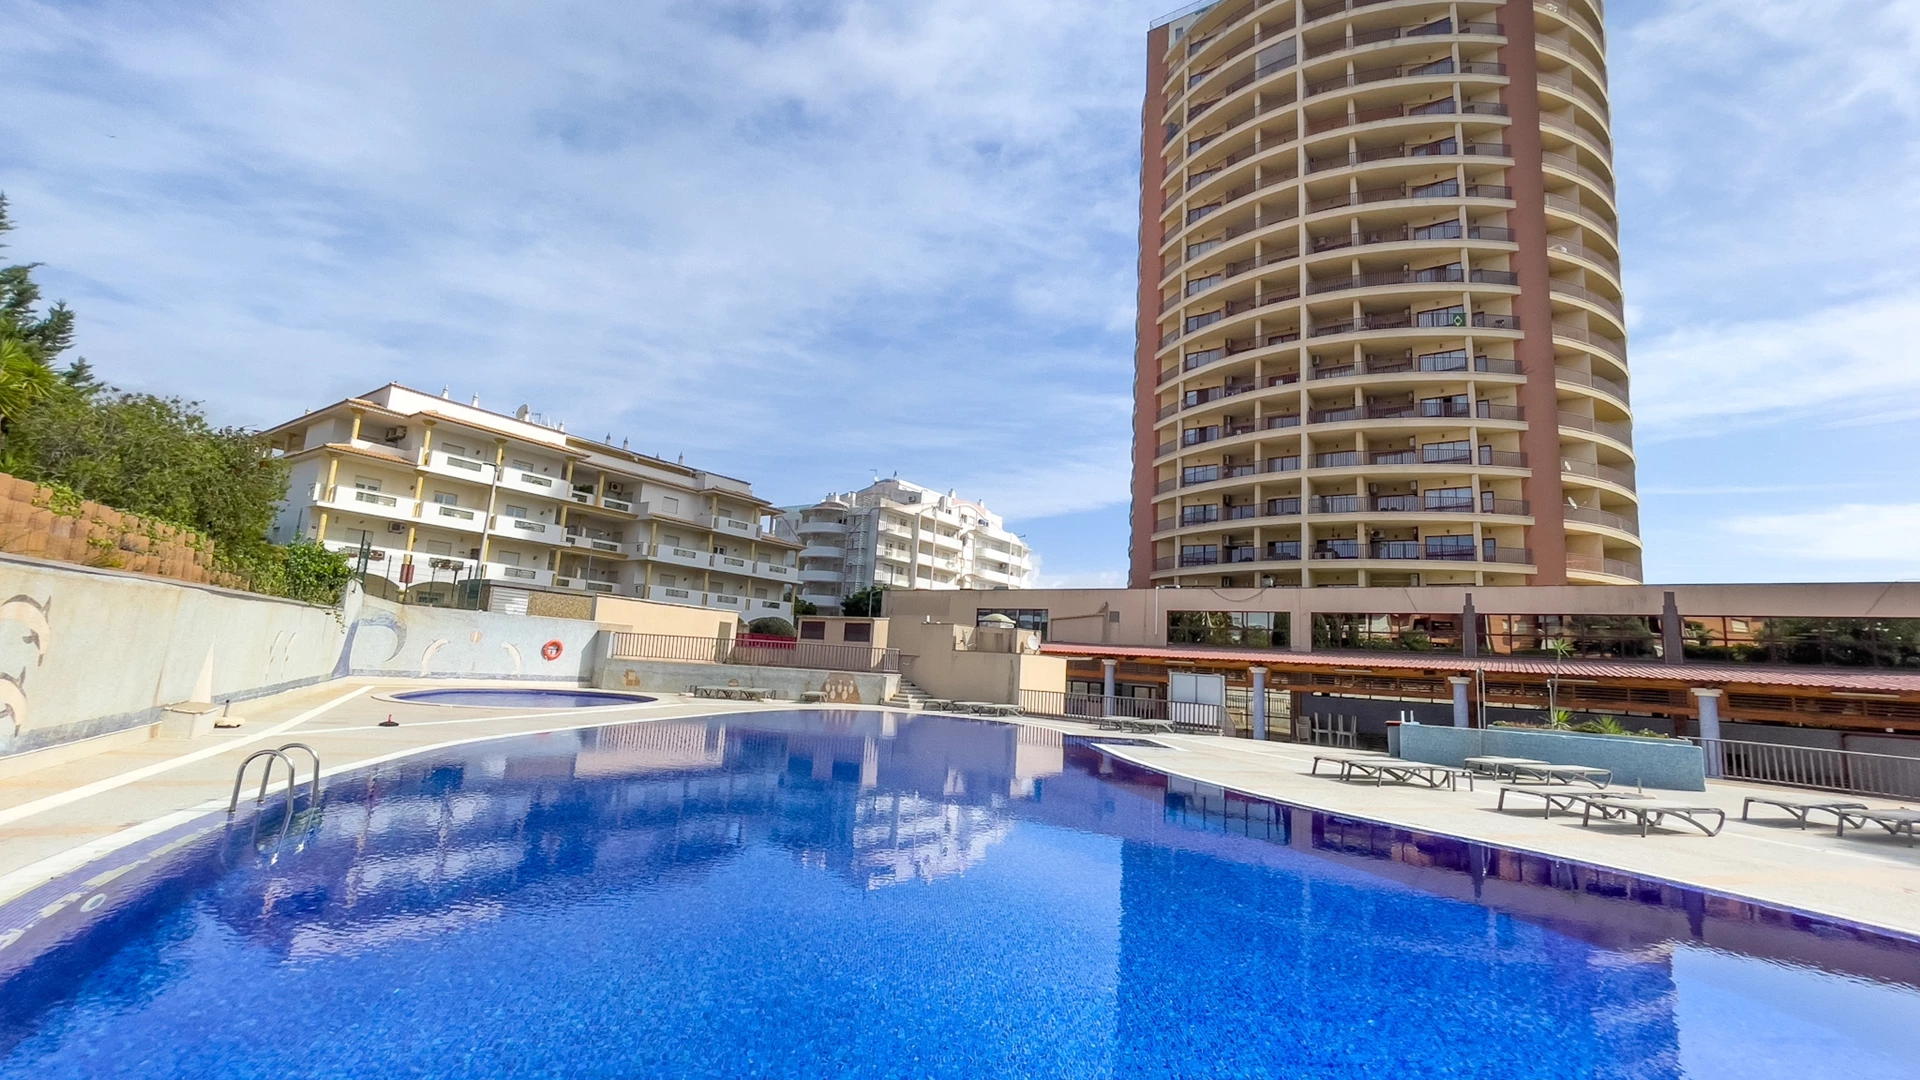 Apartamento T1 com piscina na Praia da Rocha